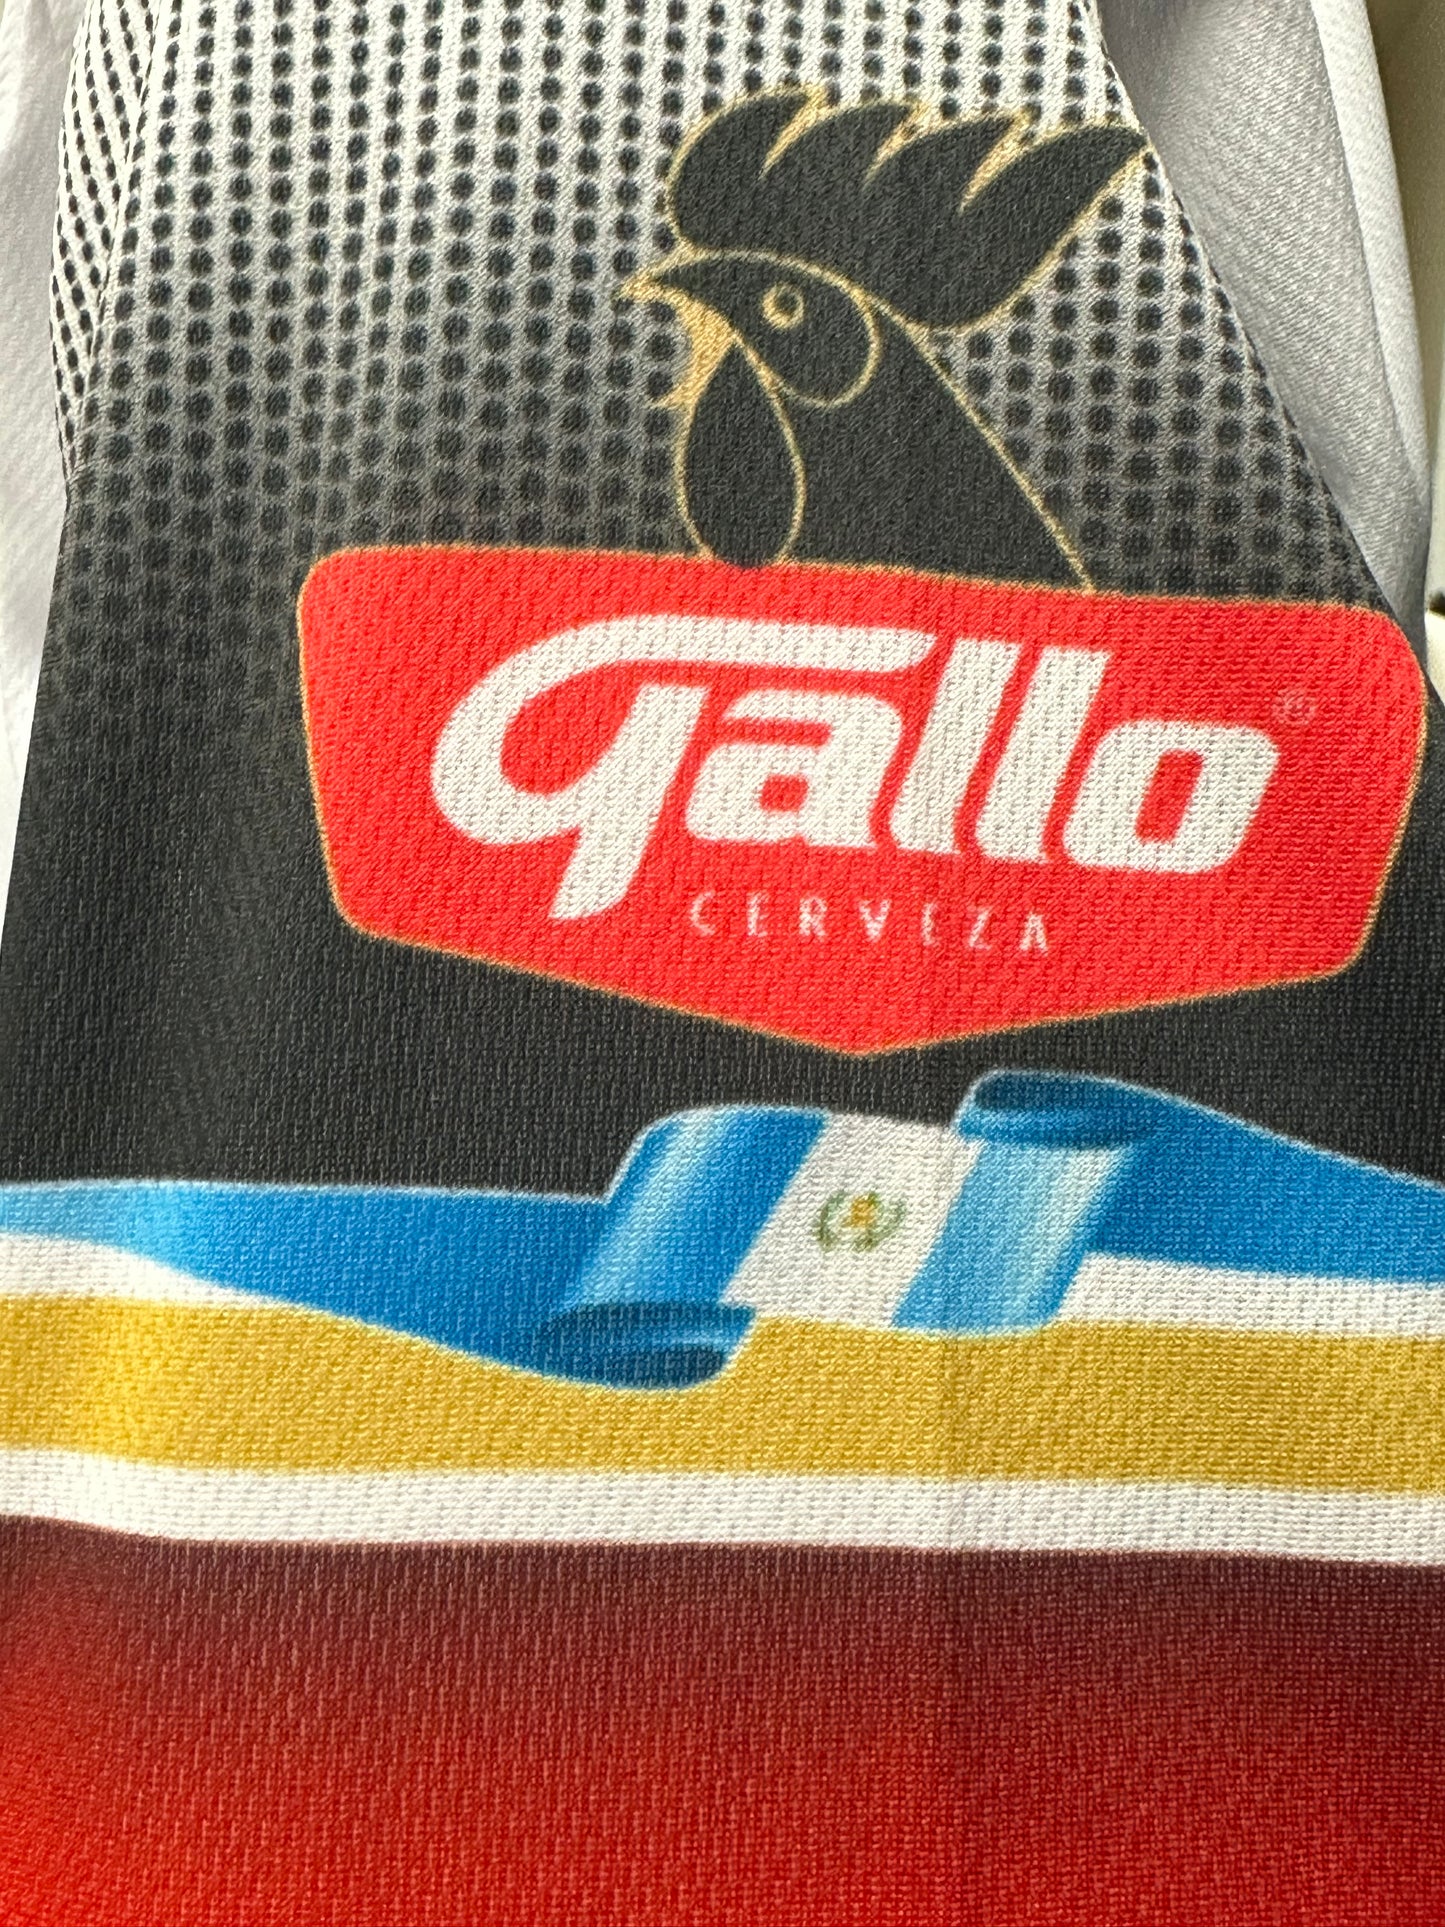 Men's Guatemalan Gallo Beer Jersey